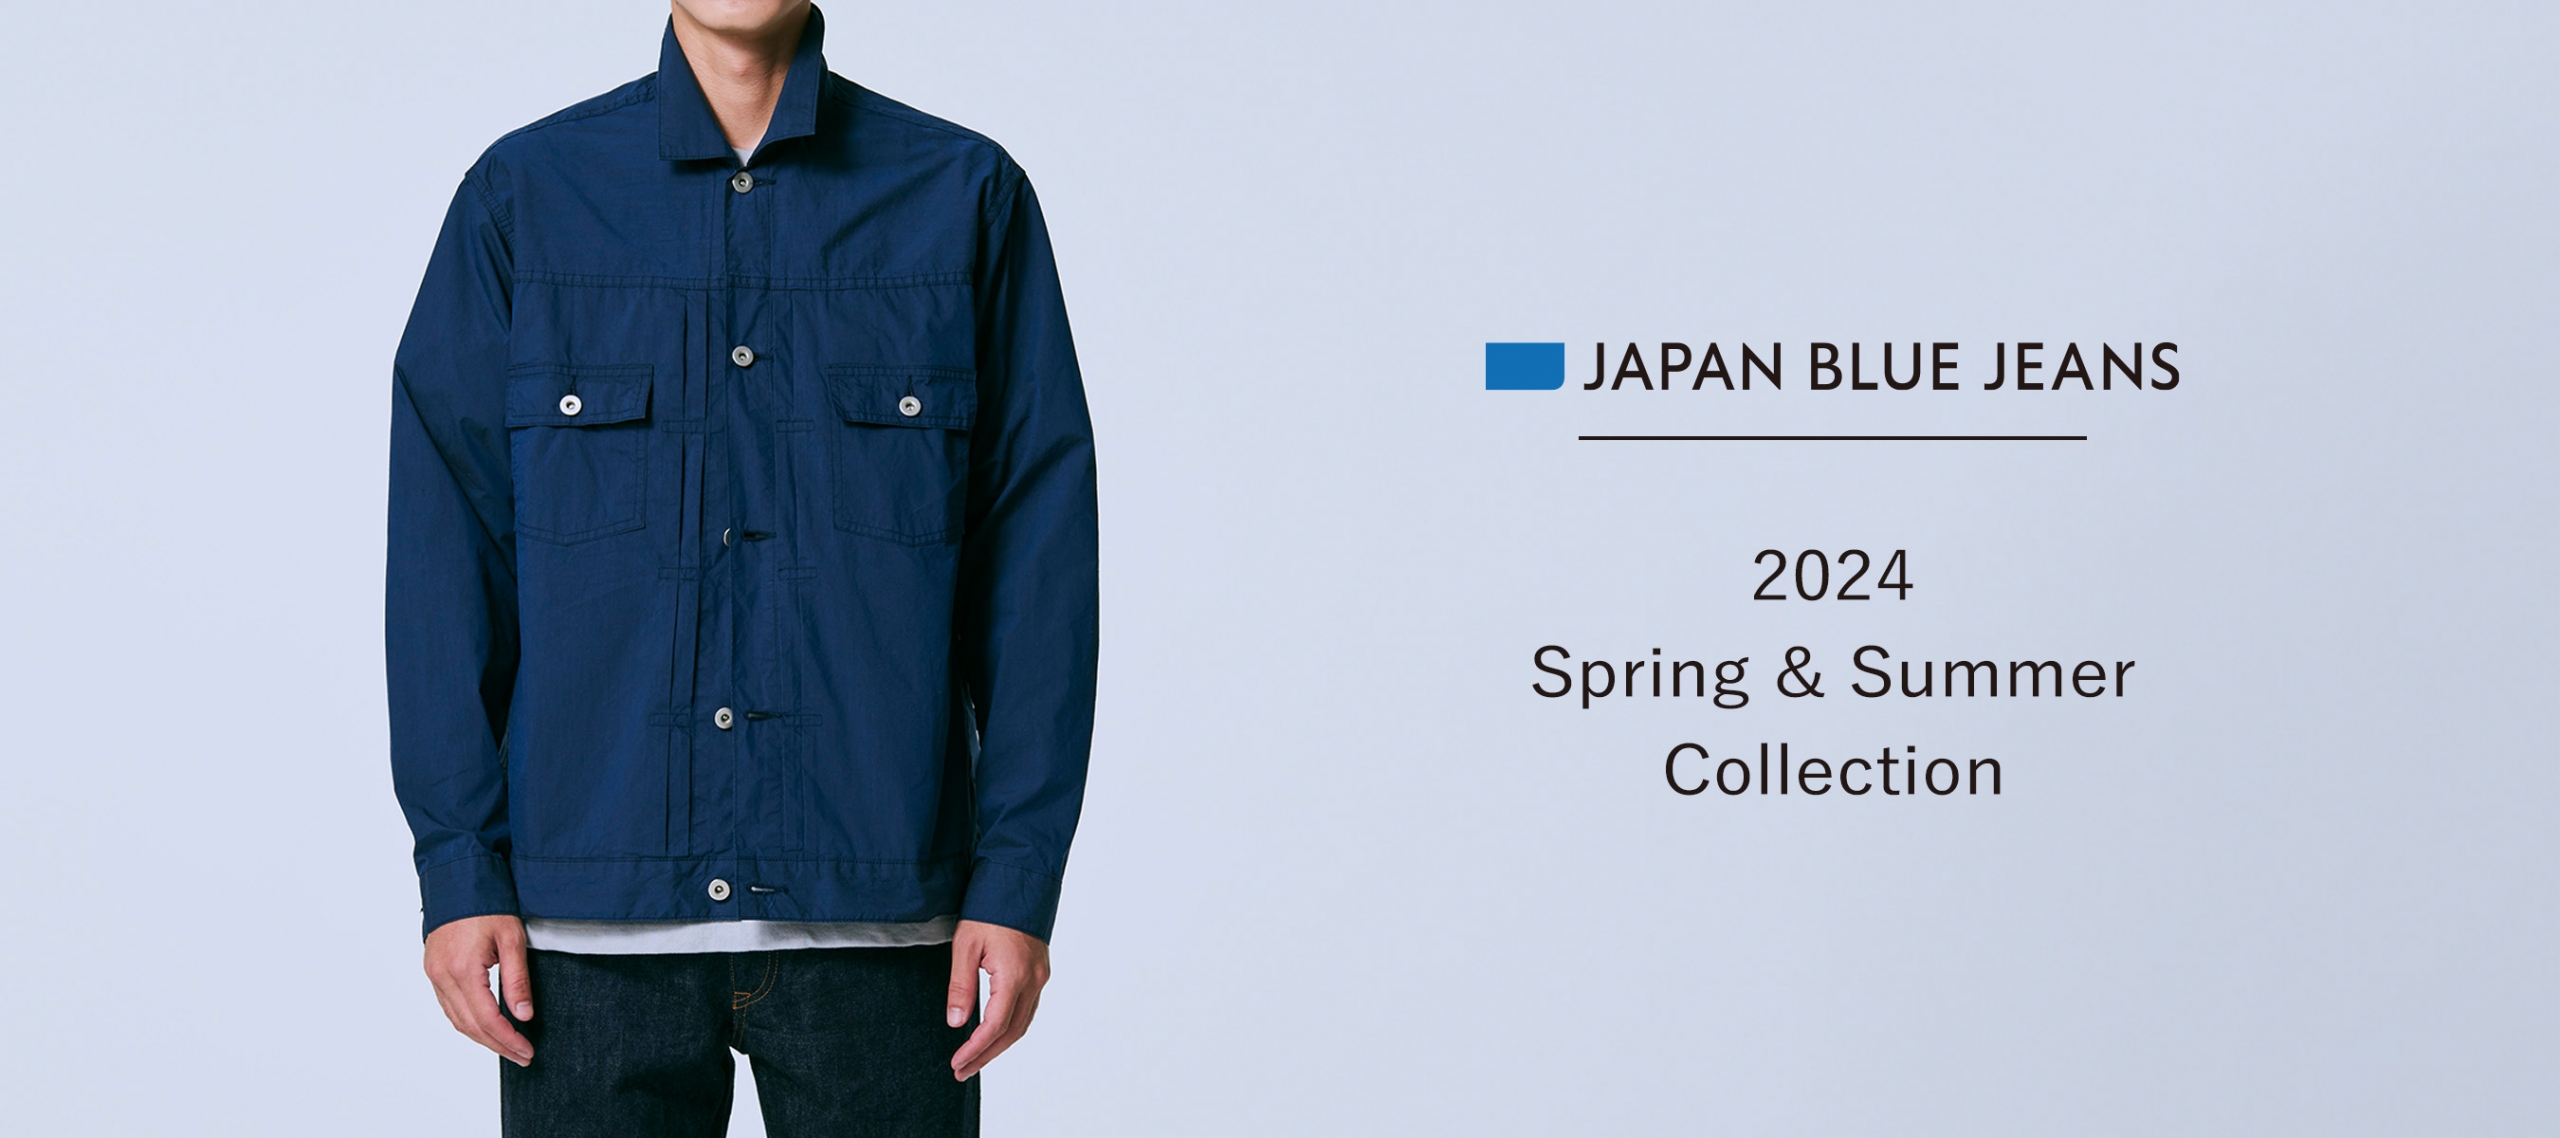 JAPAN BLUE JEANS 2024 Spring & Summer Collection LookBook